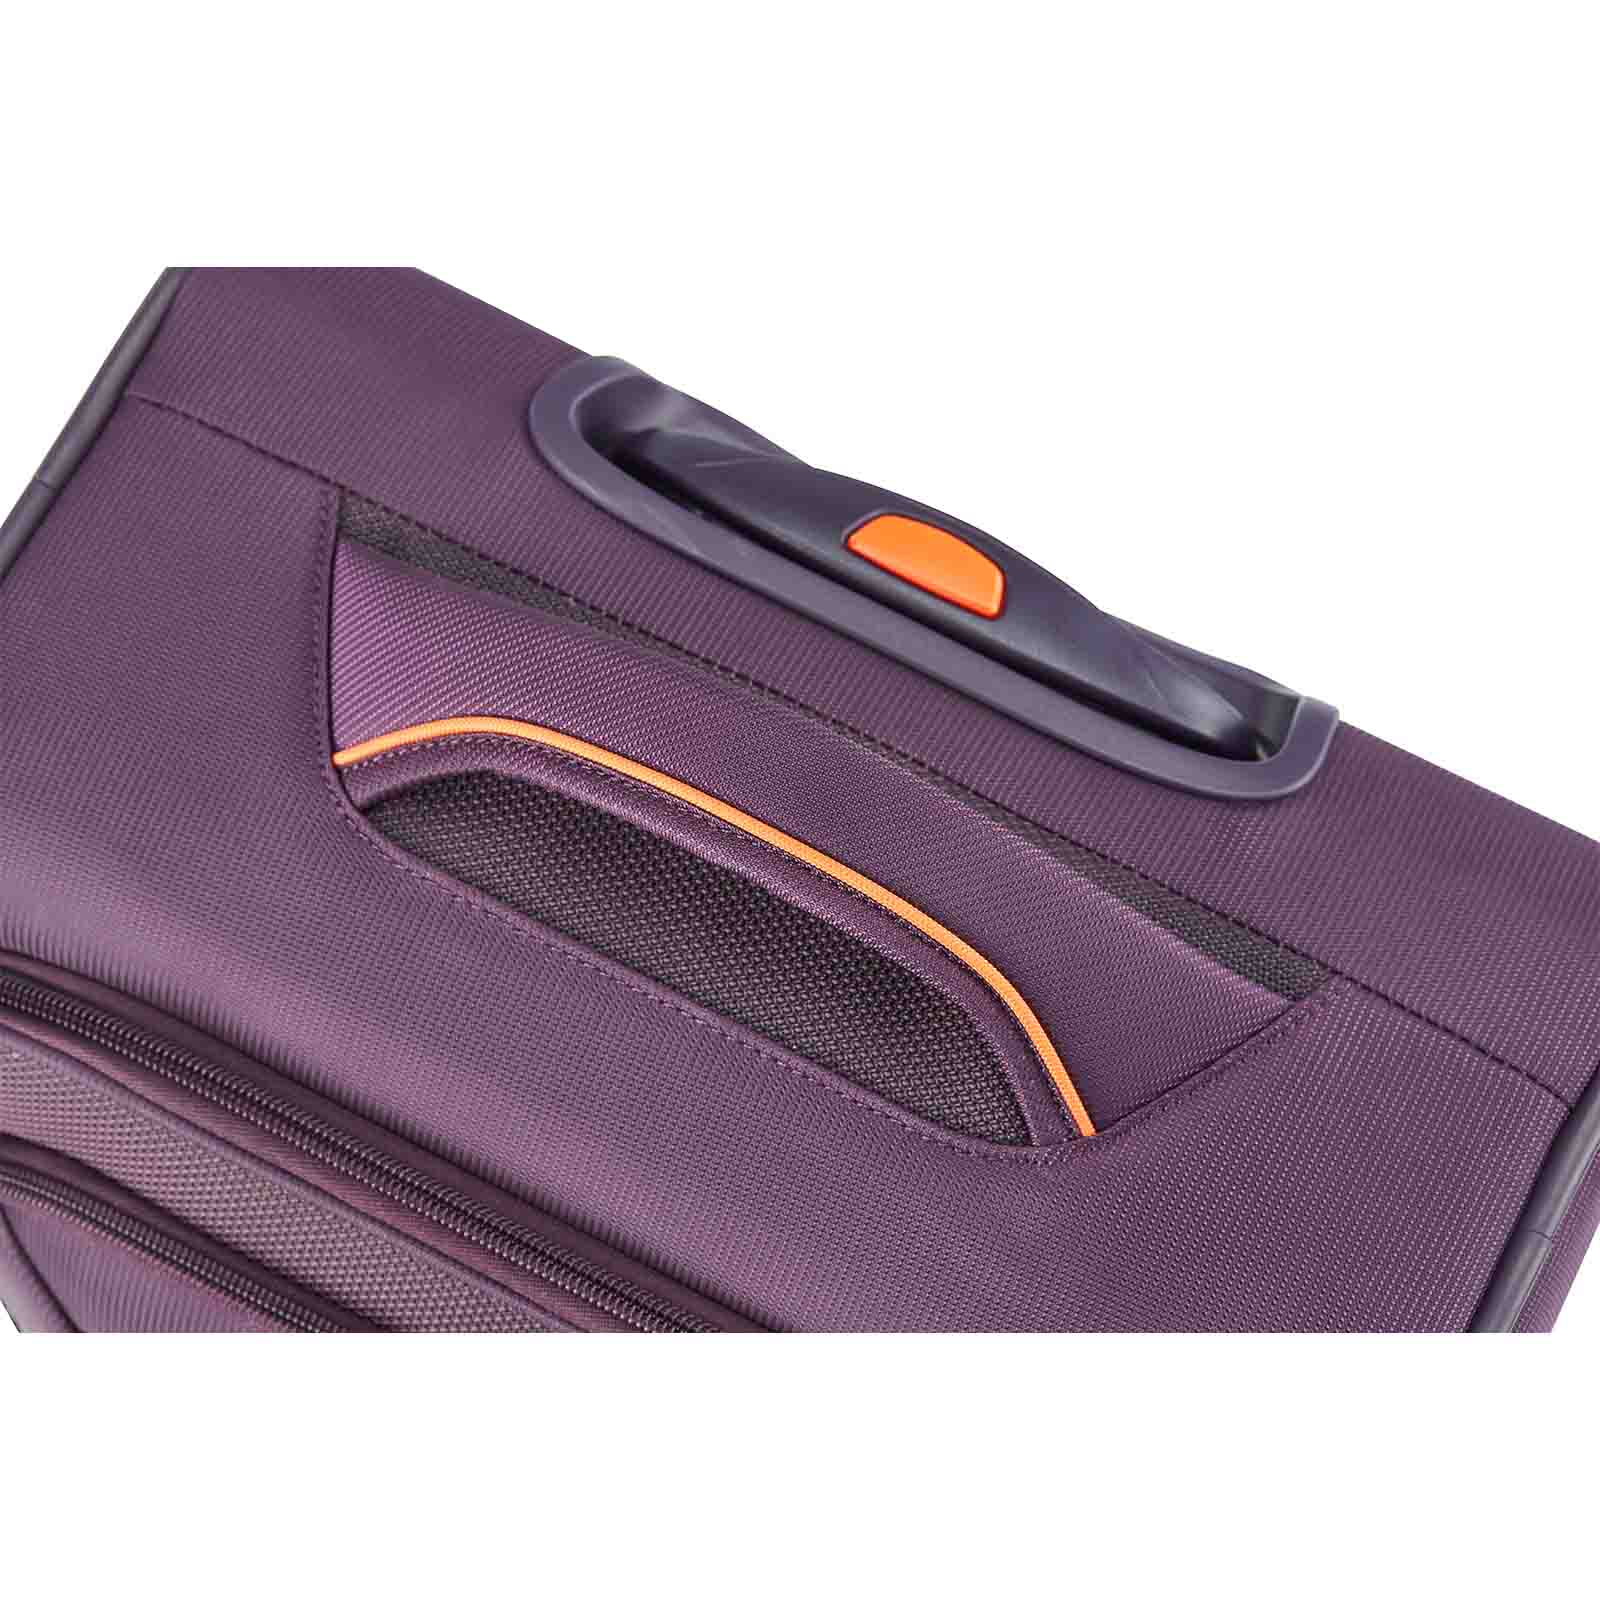 American-Tourister-Applite-4-Eco-50cm-Carry-On-Suitcase-Purple-Orange-Handle